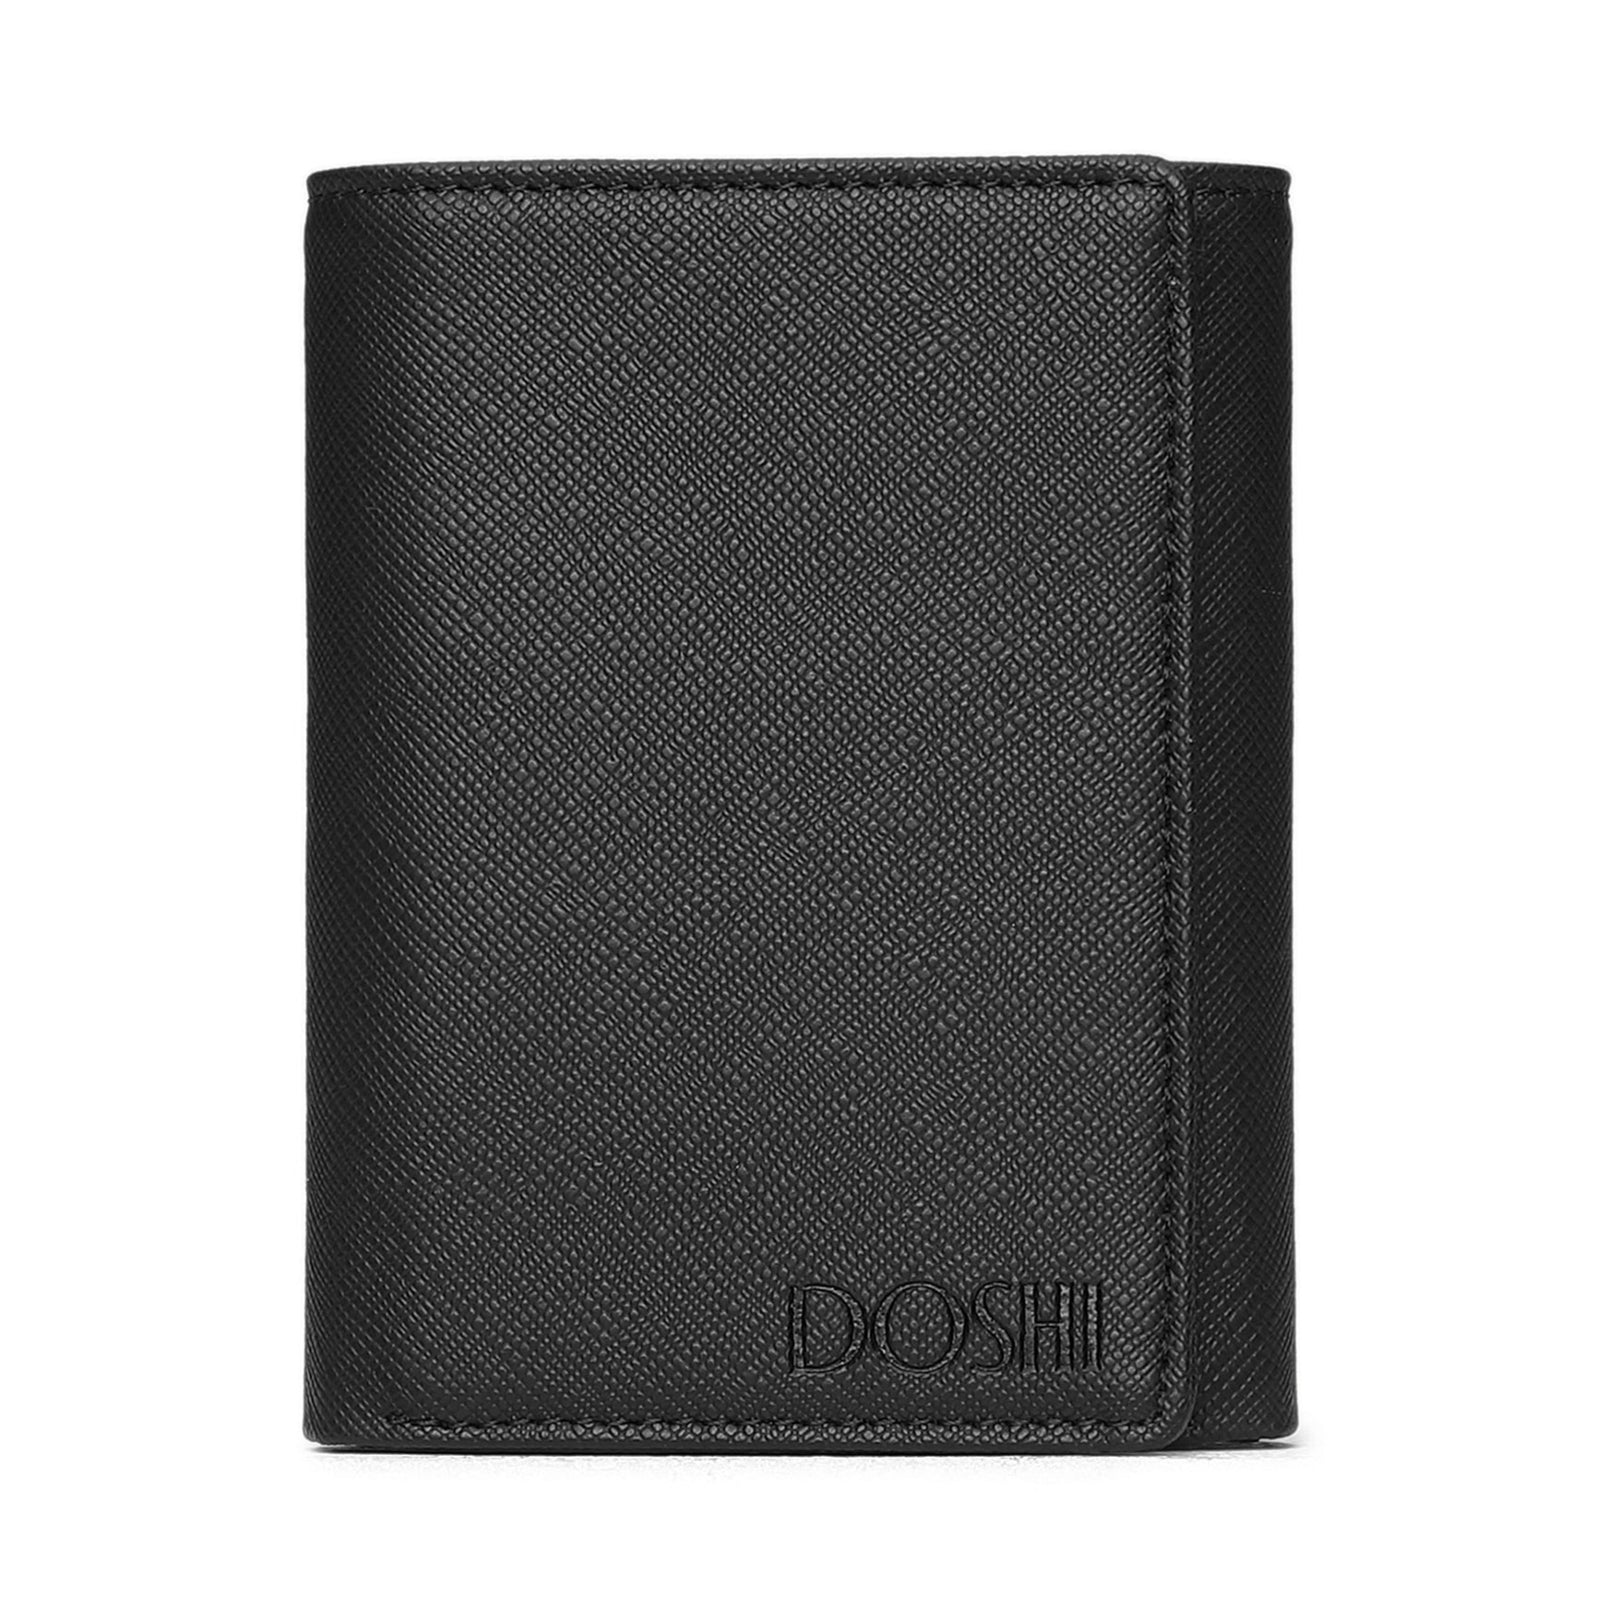 Denim Men's Trifold Designer Wallet - Sleek and Slim Includes ID